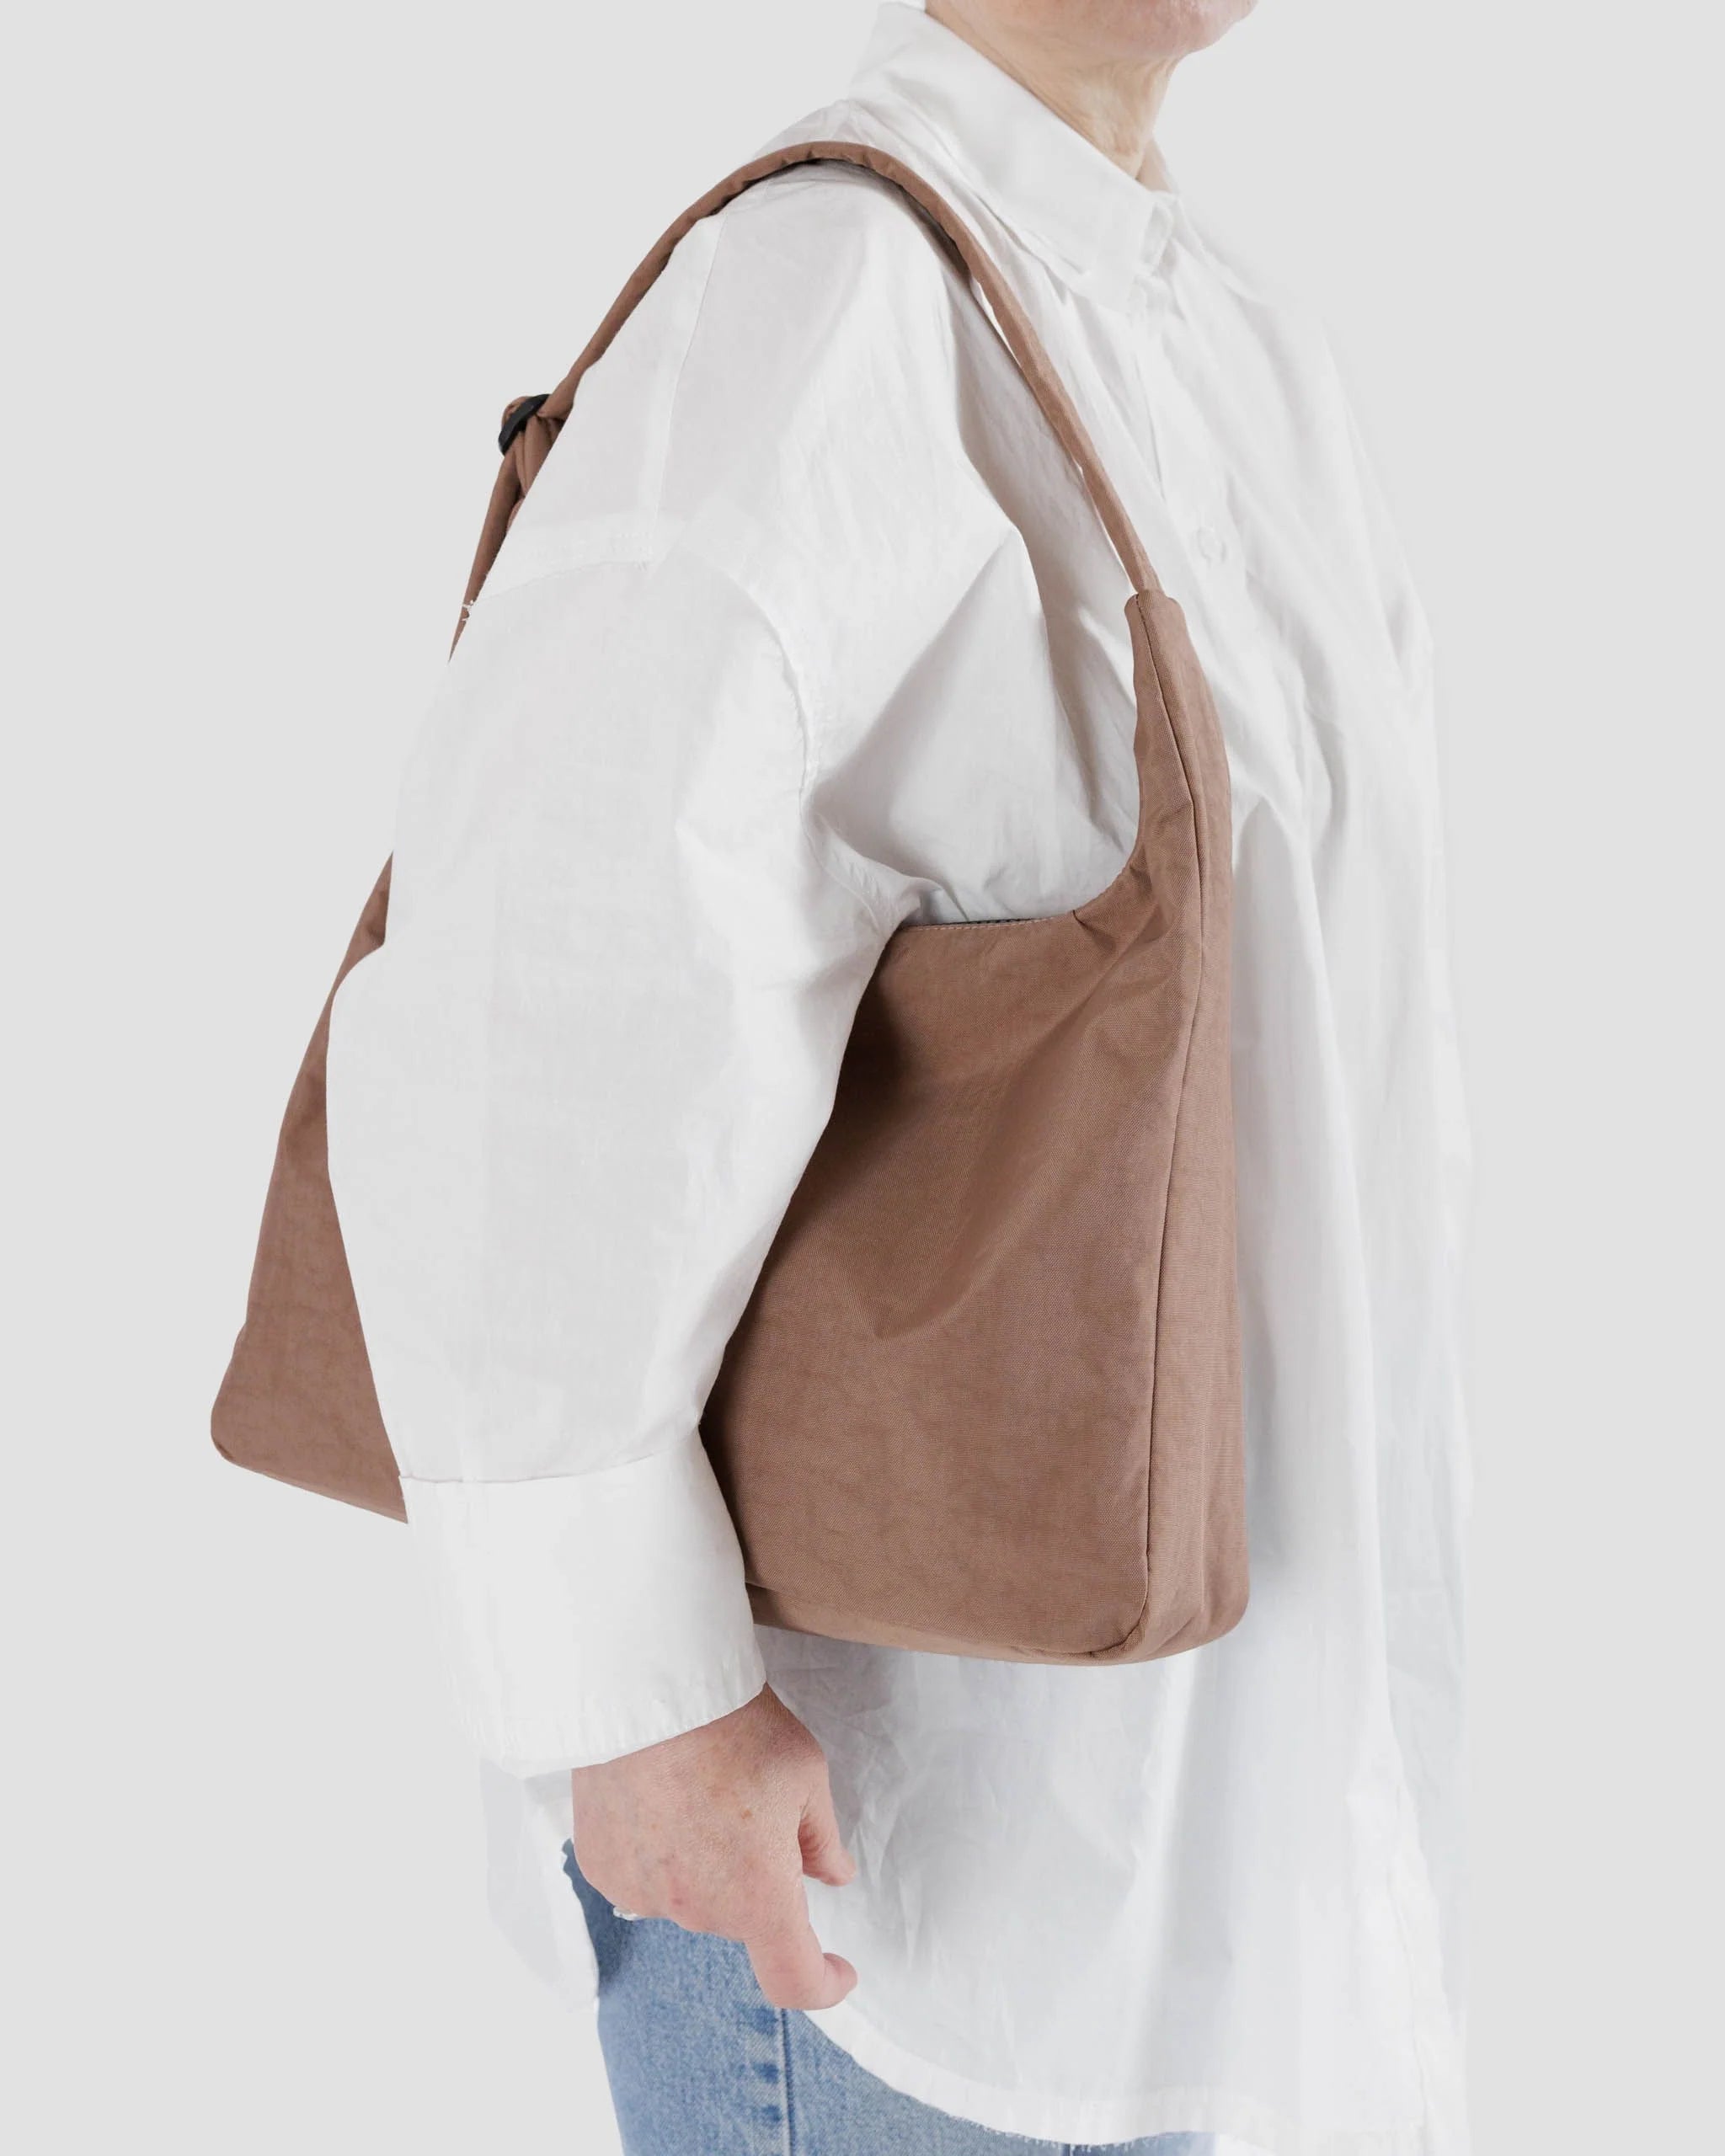 Baggu Nylon Shoulder Bag - Cocoa | Collective Request 